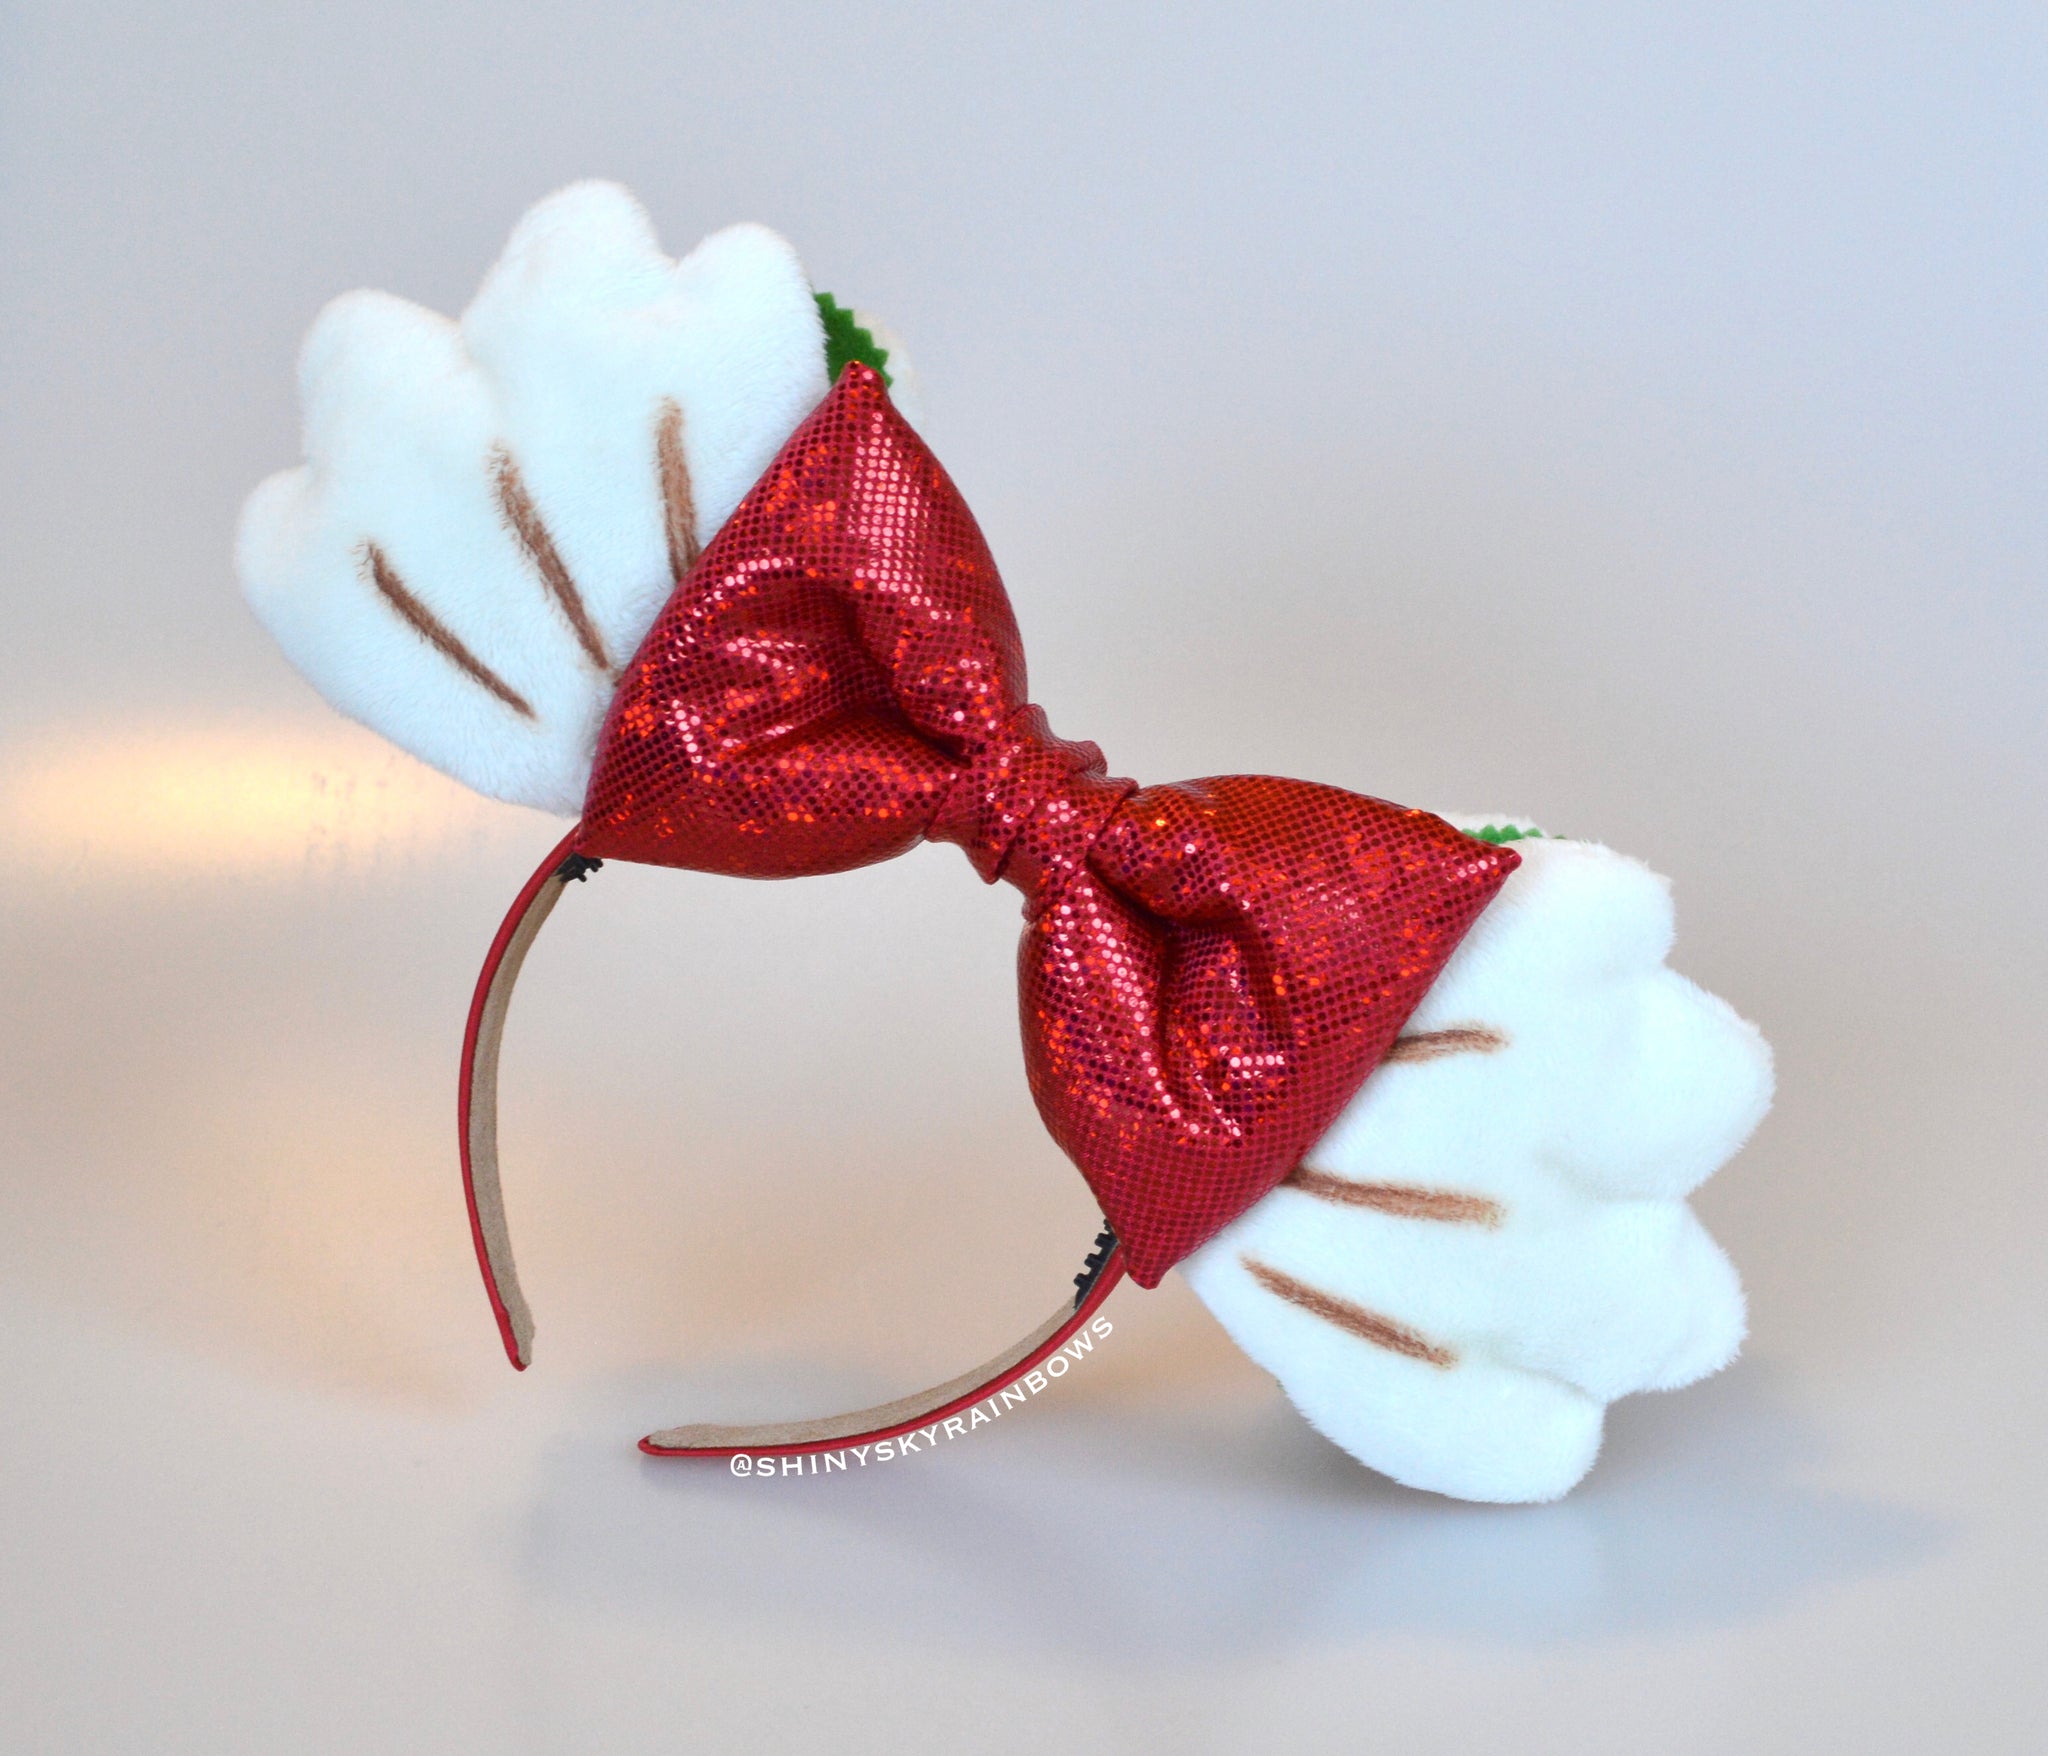 Glove Shaped Pao Steamed Bun Sandwich Ears